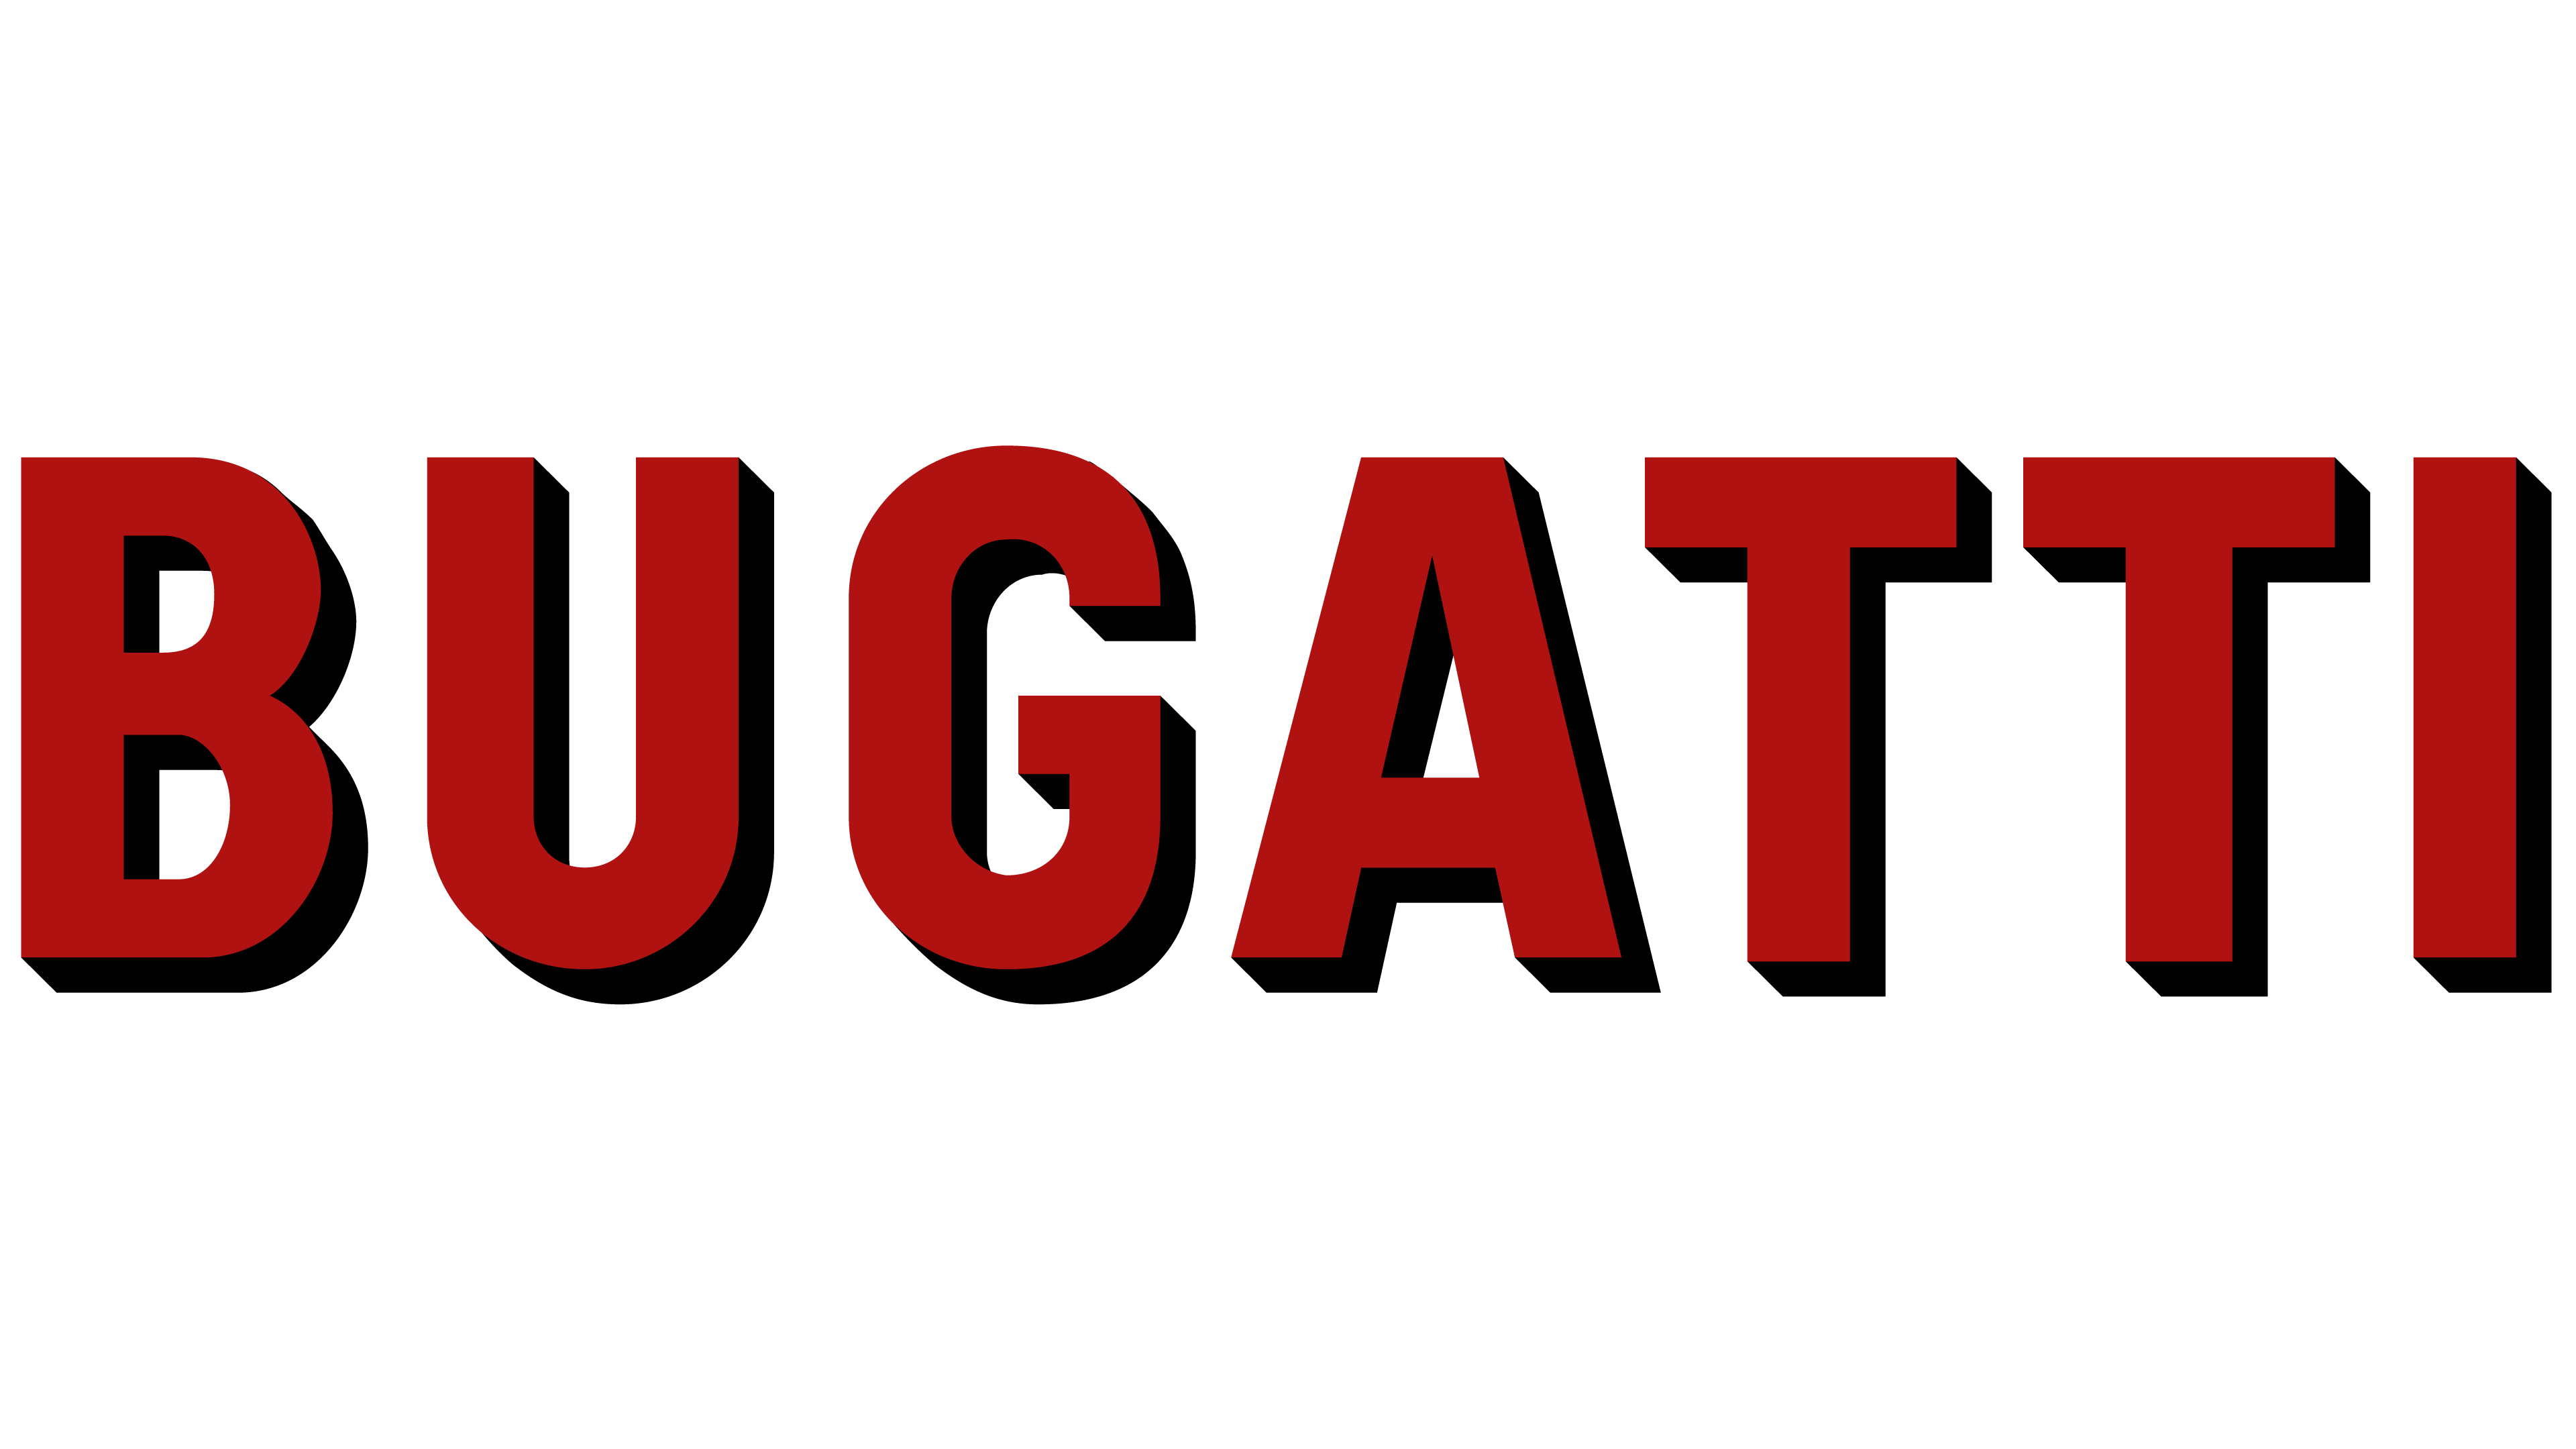 बुगाटी